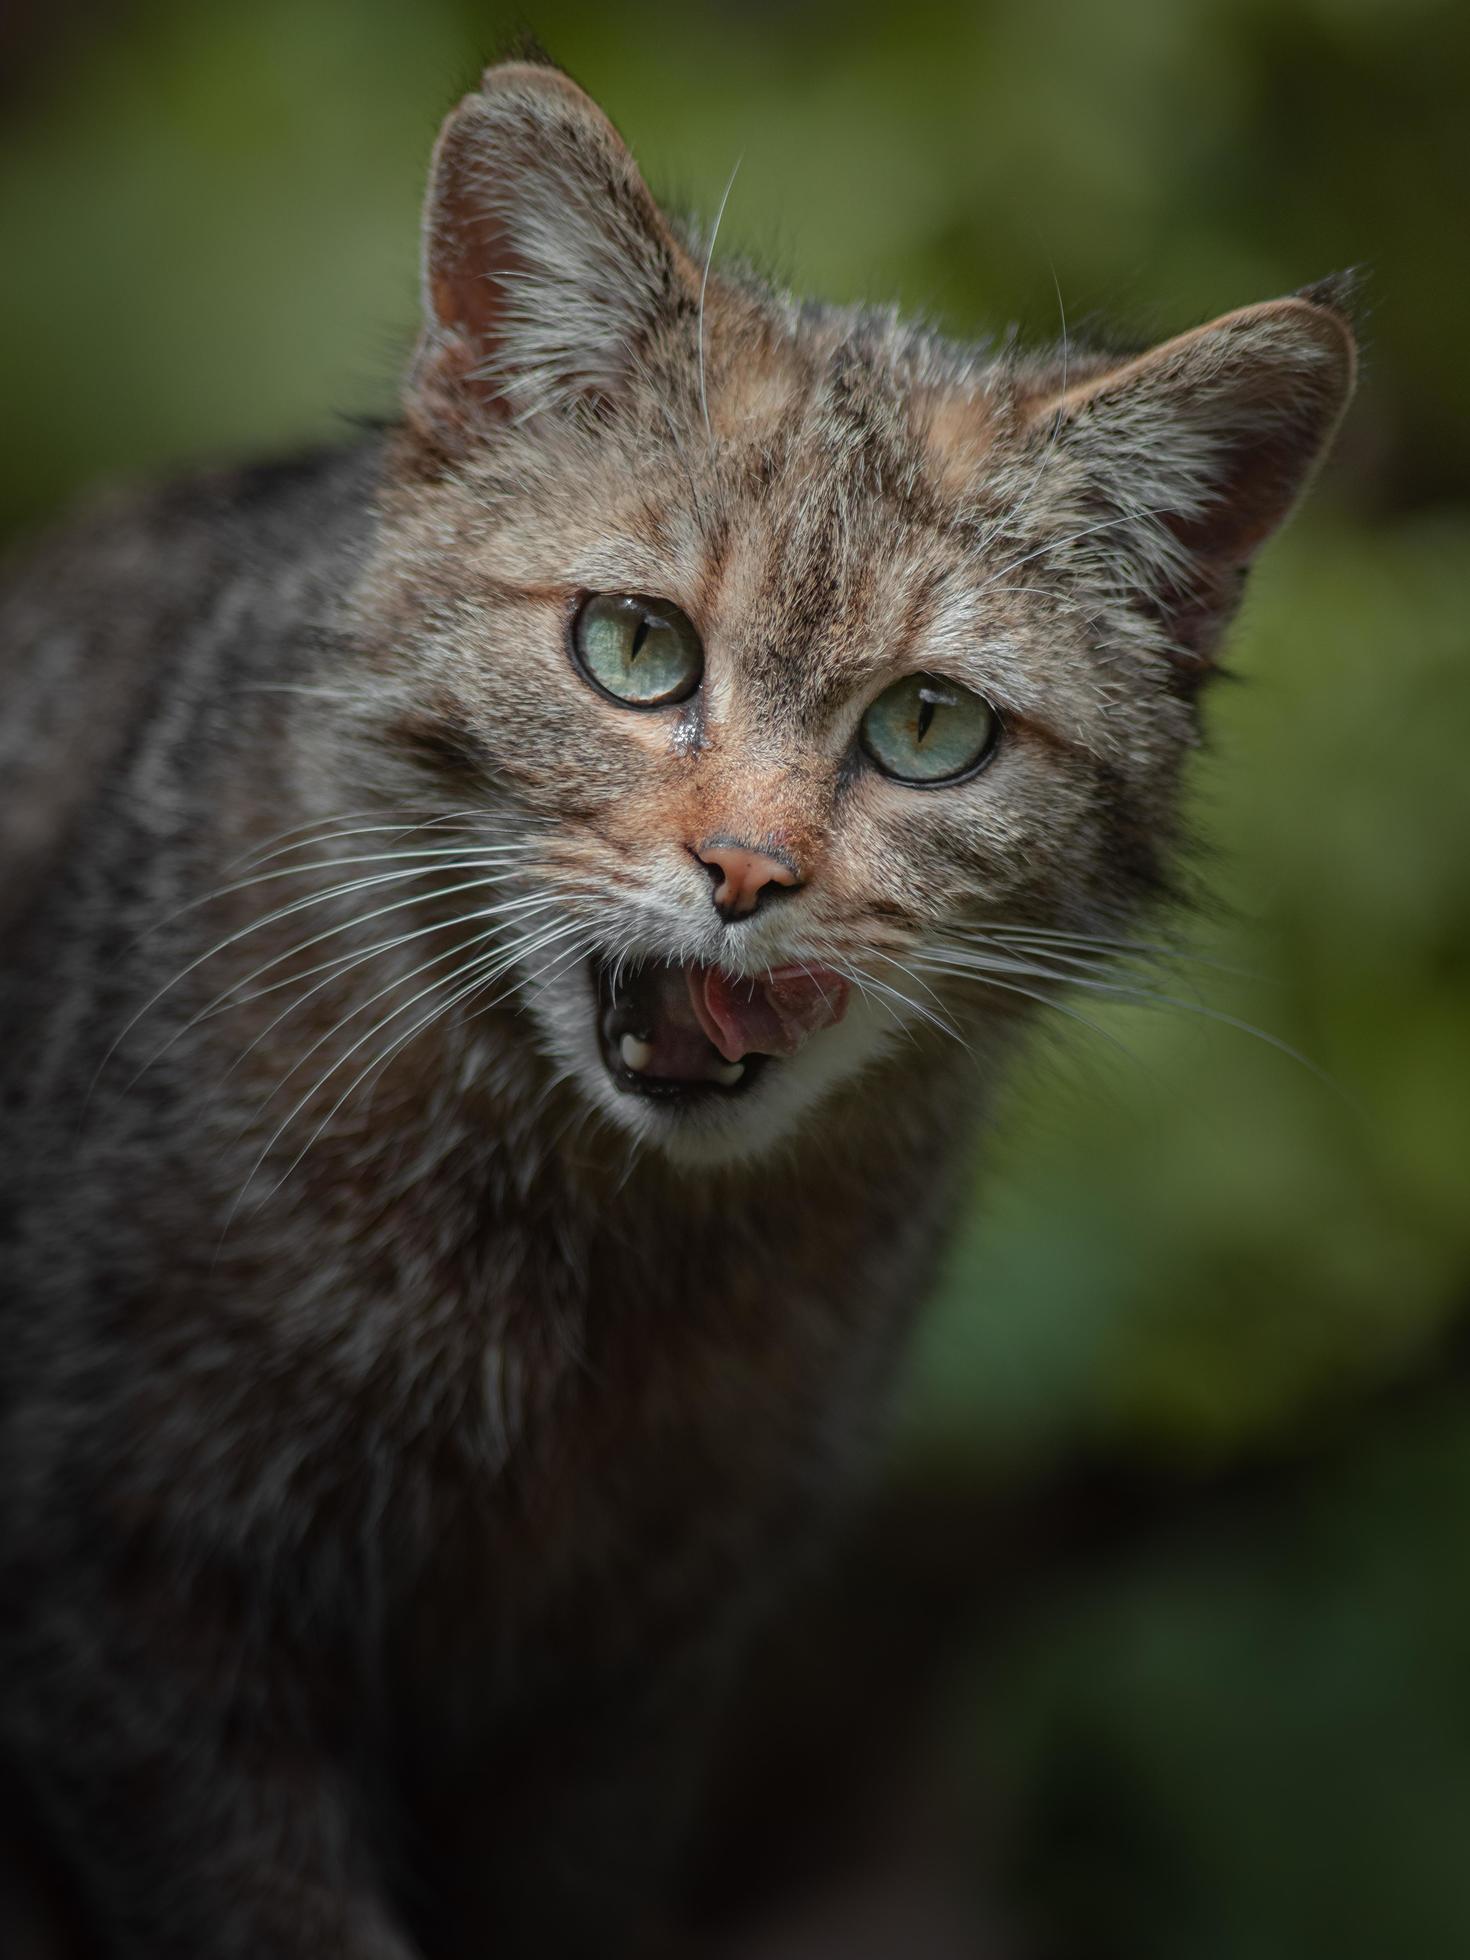 portret van Europese wilde kat foto